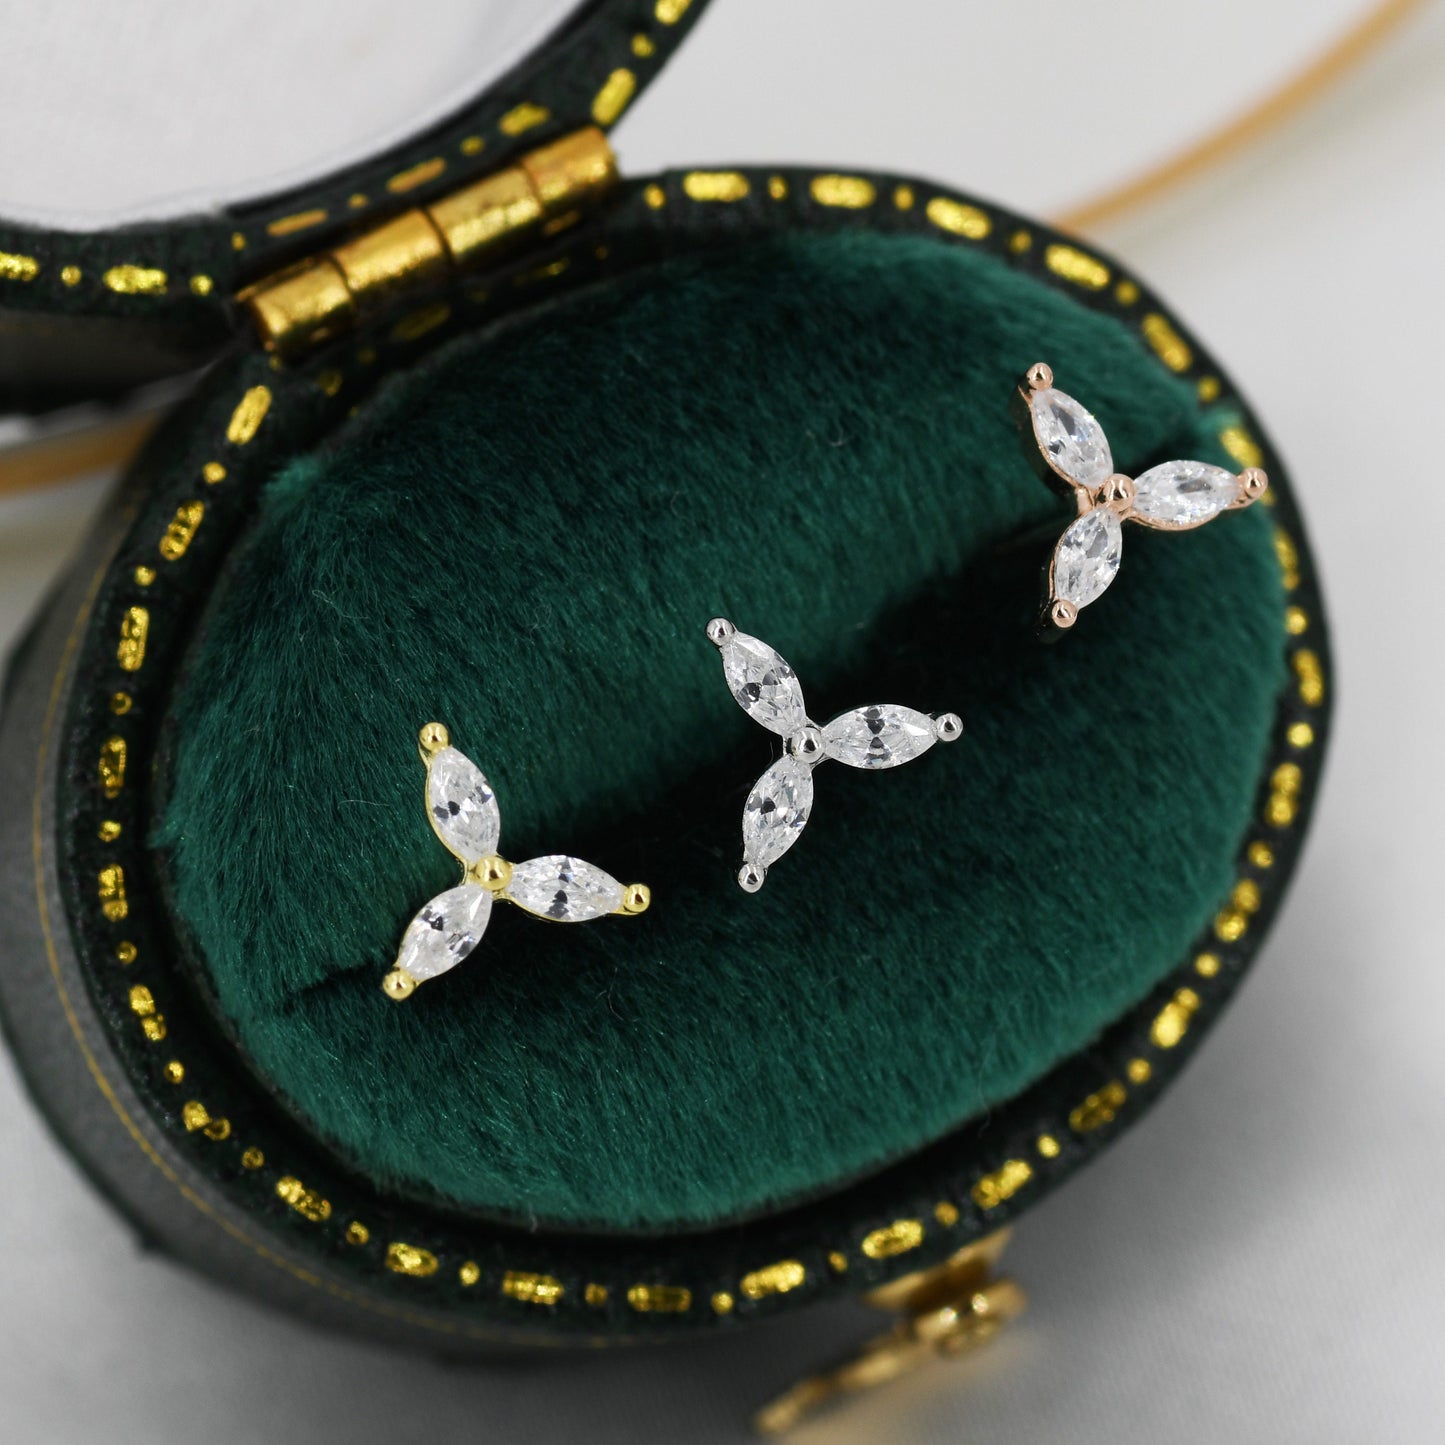 Three Marquise CZ Stud Earrings in Sterling Silver, Silver, Gold or Rose Gold, Three CZ Earrings, Trinity Earrings